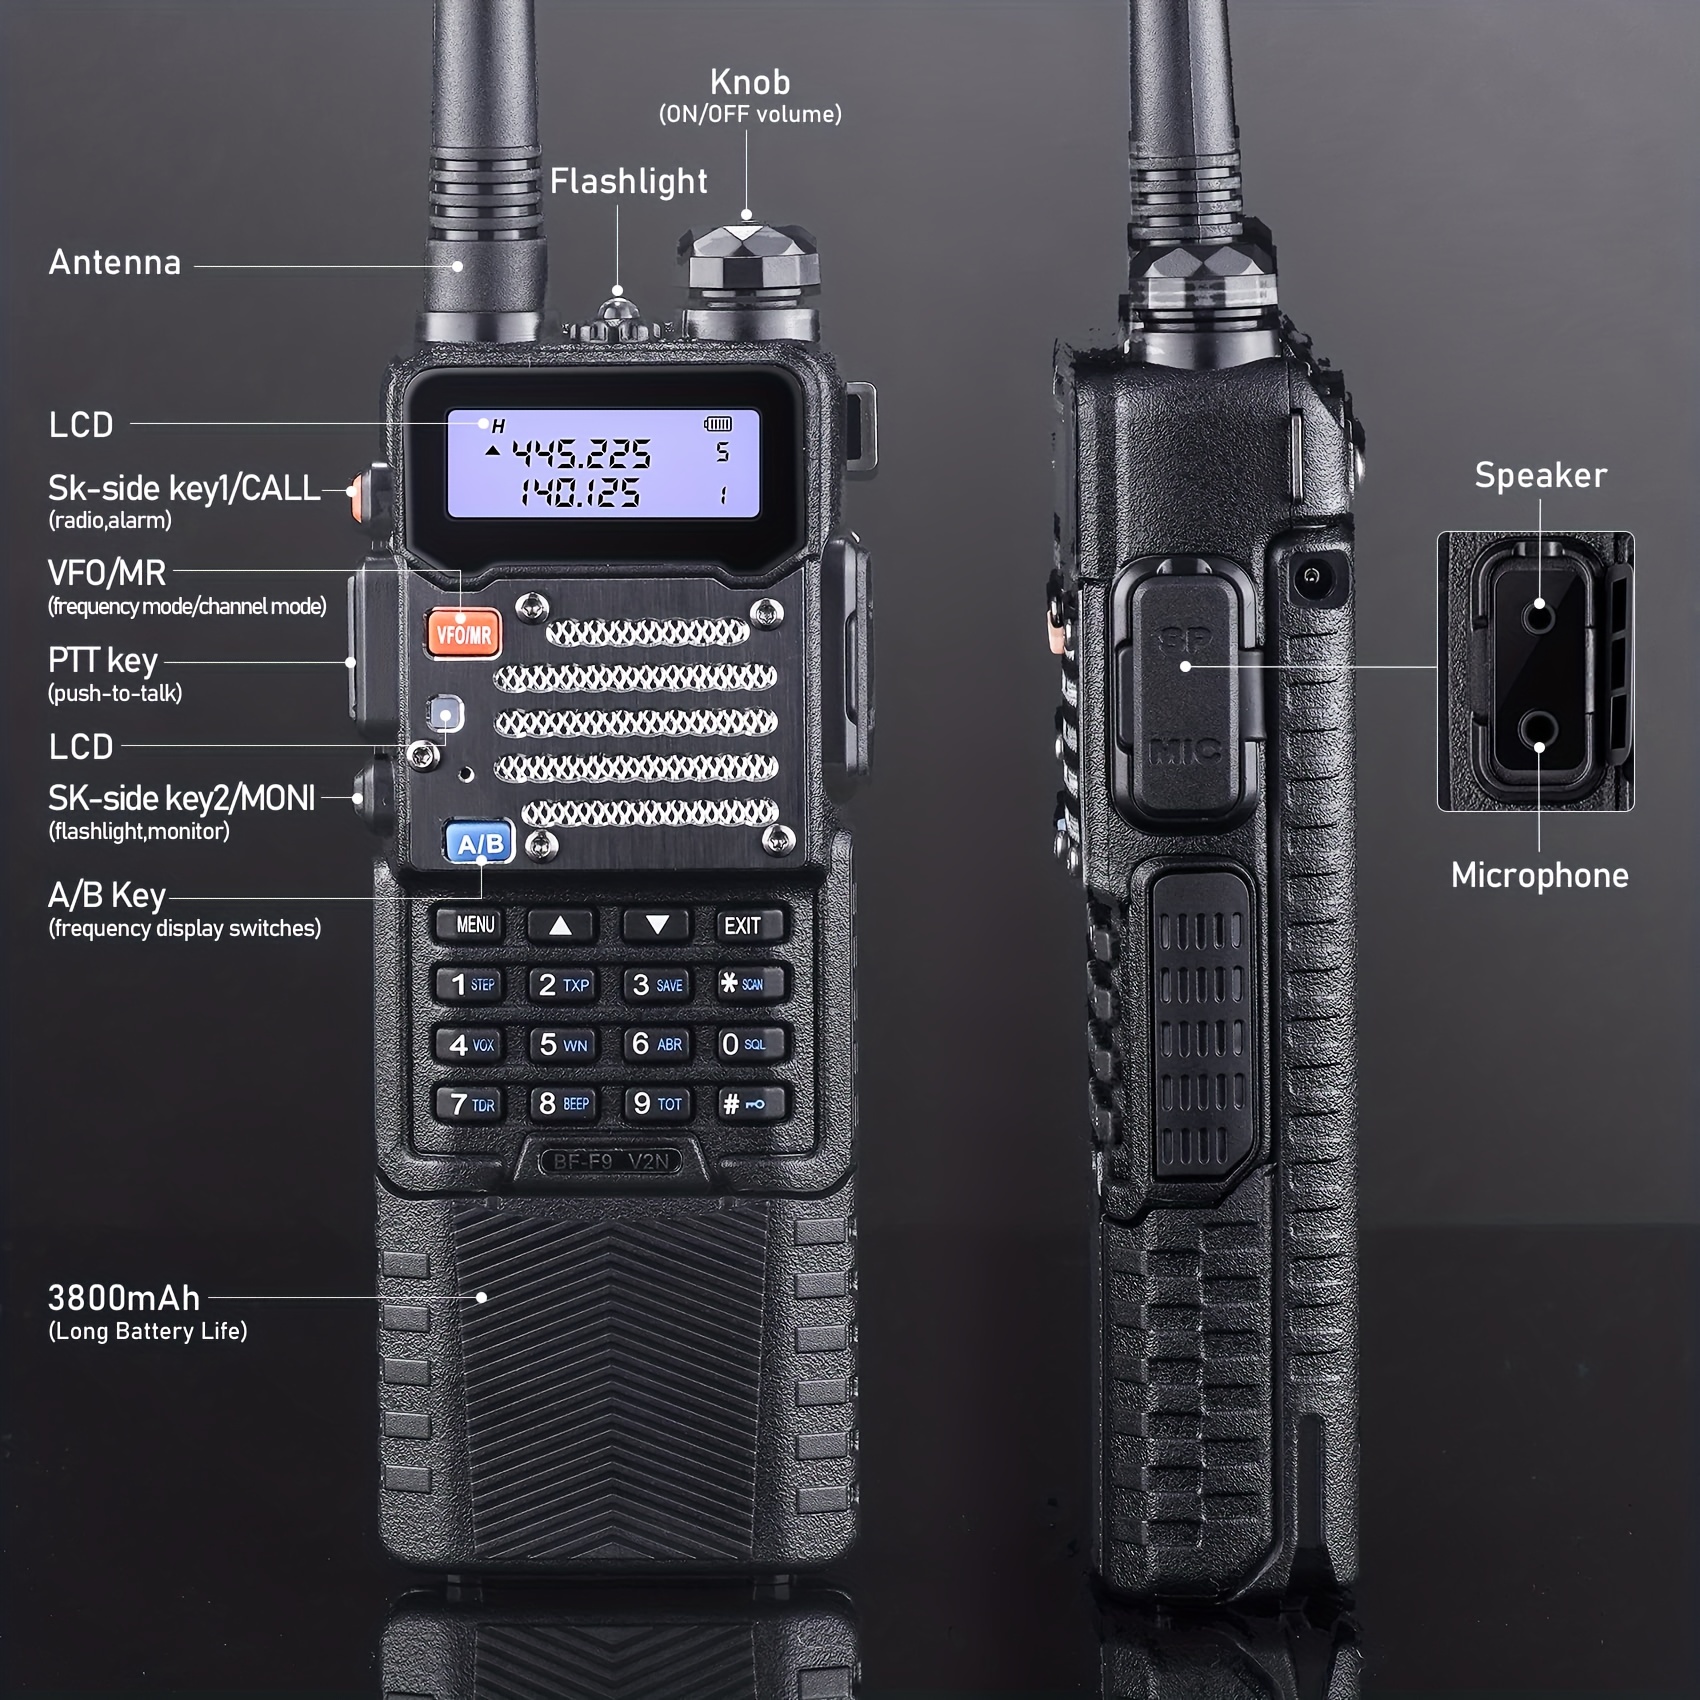 BAOFENG Two Way Radio、BF-F V N Wデュアルバンド無線、2100 mAh Li-ion Batteryポータブルトランシーバー、フルキット付き。周波数範囲144~148 420 - 8